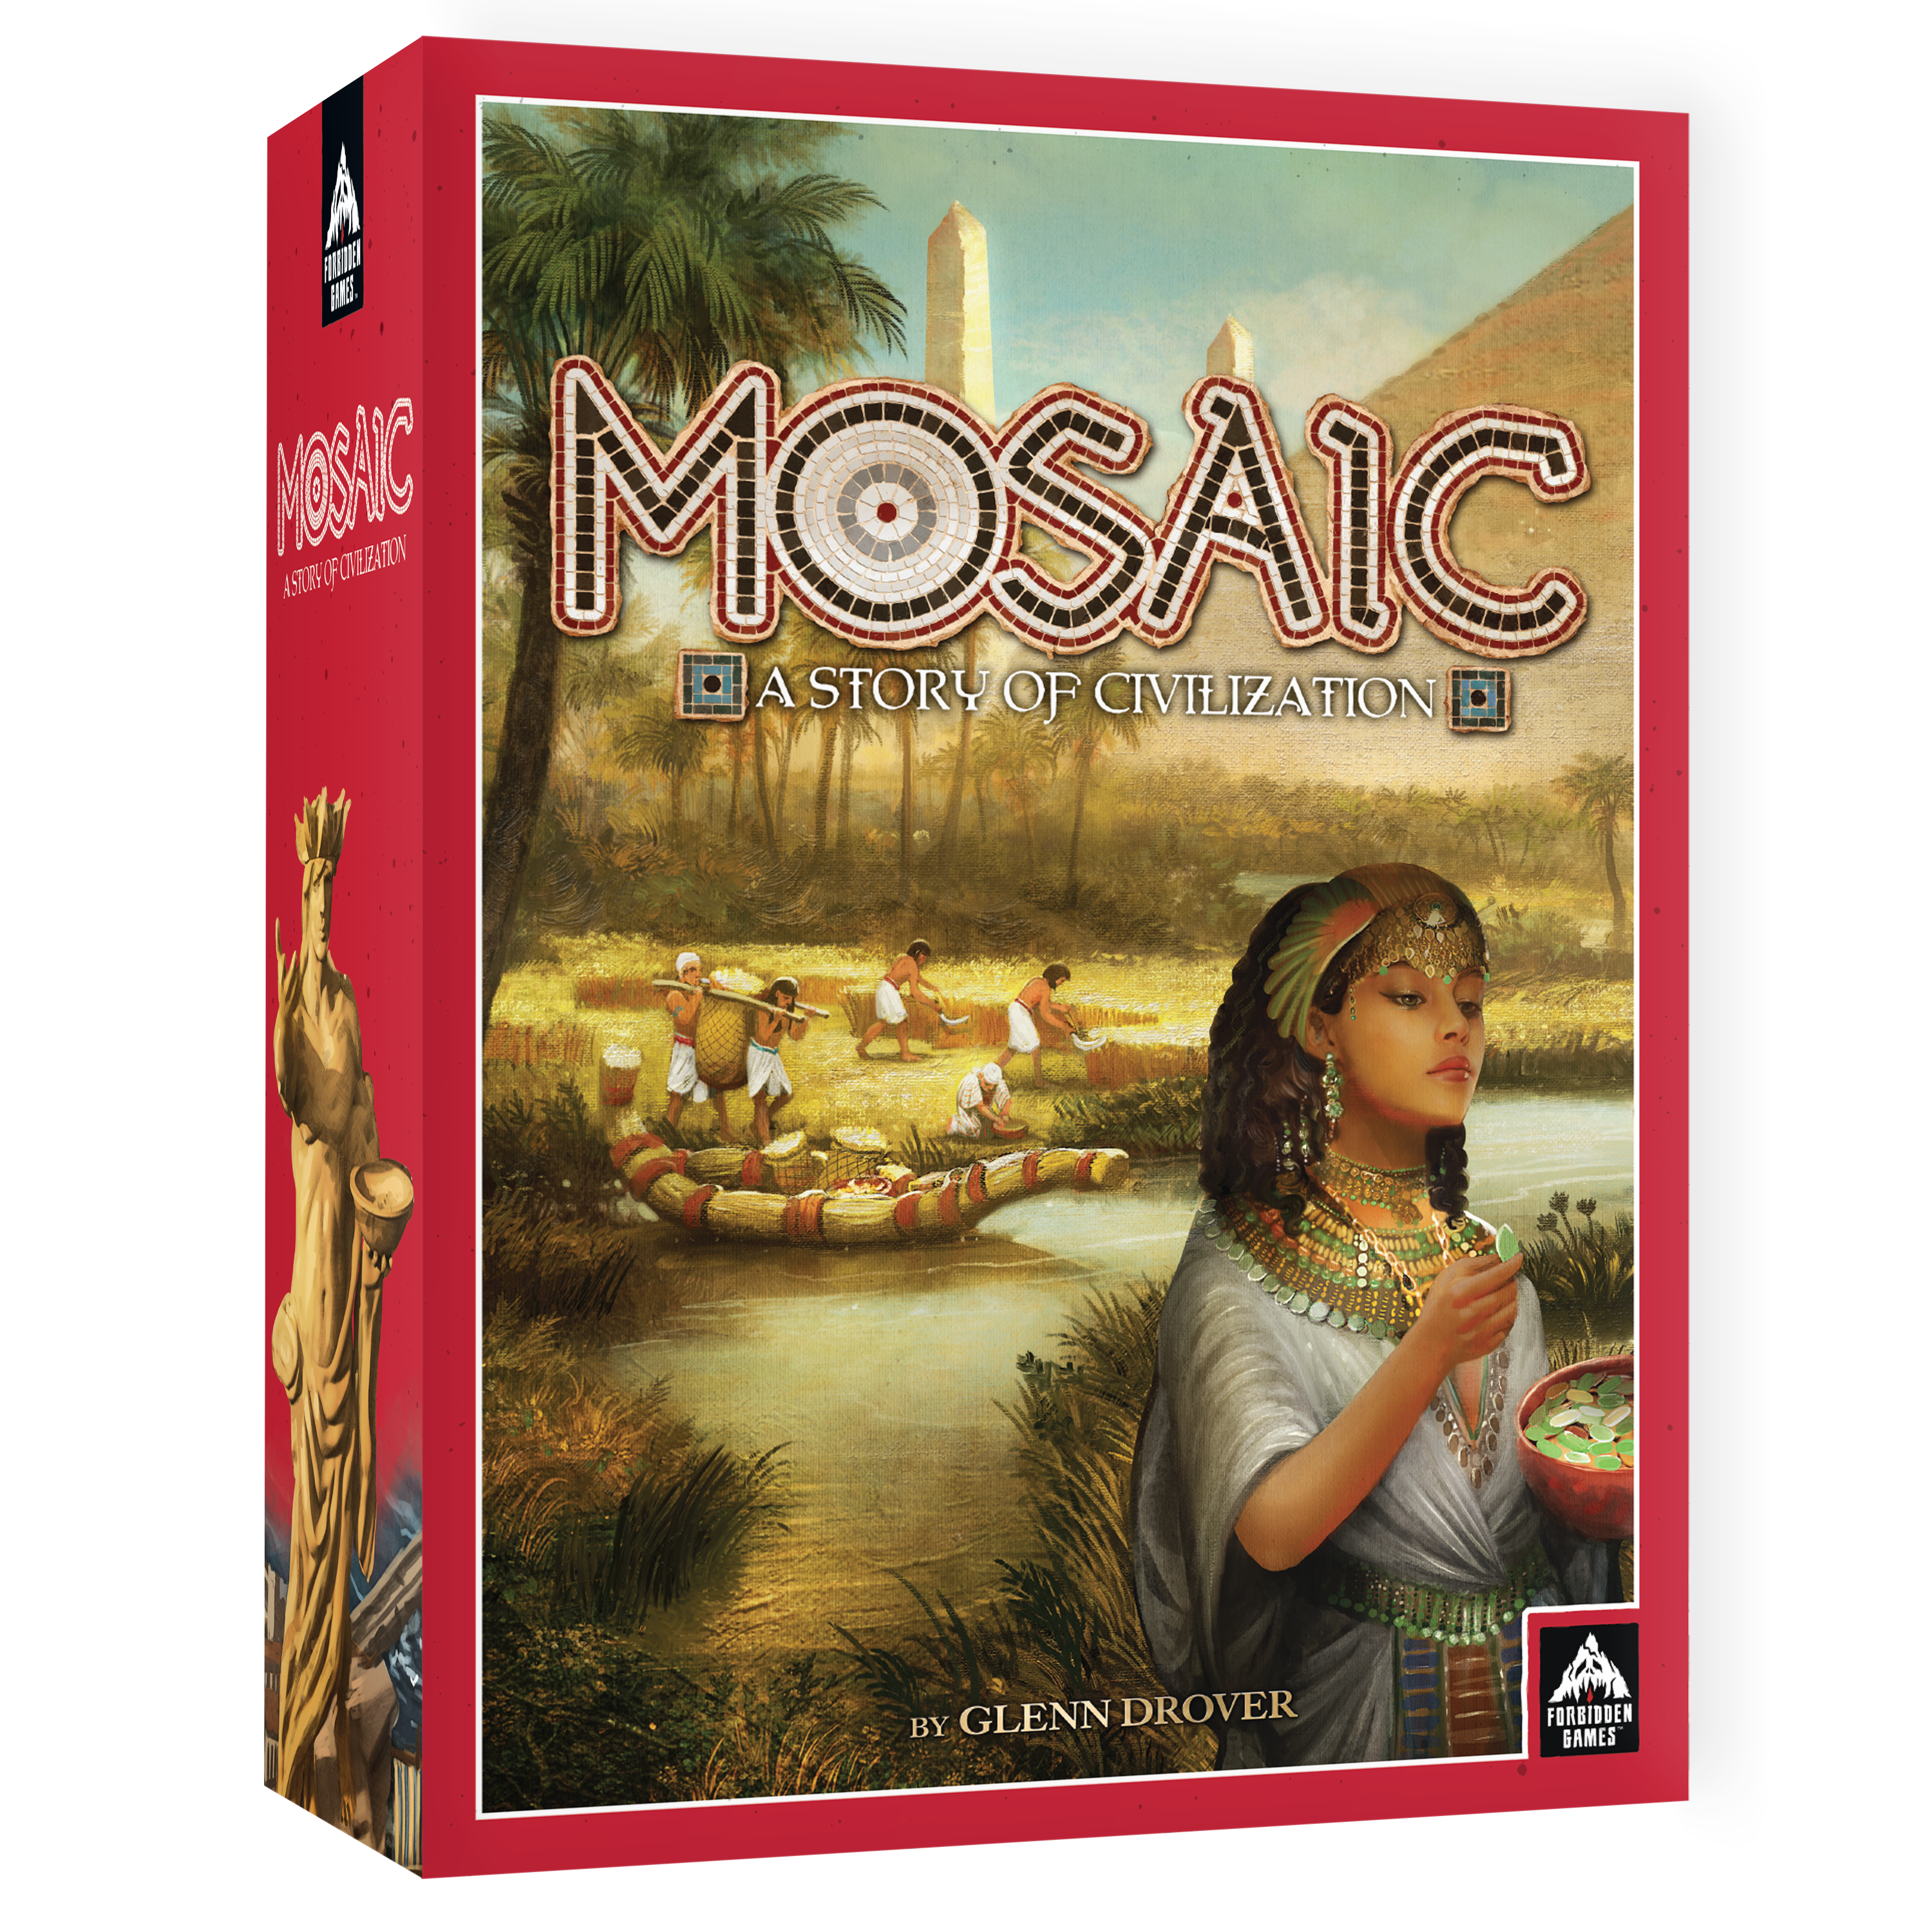 Mosiac: A Story of Civilization